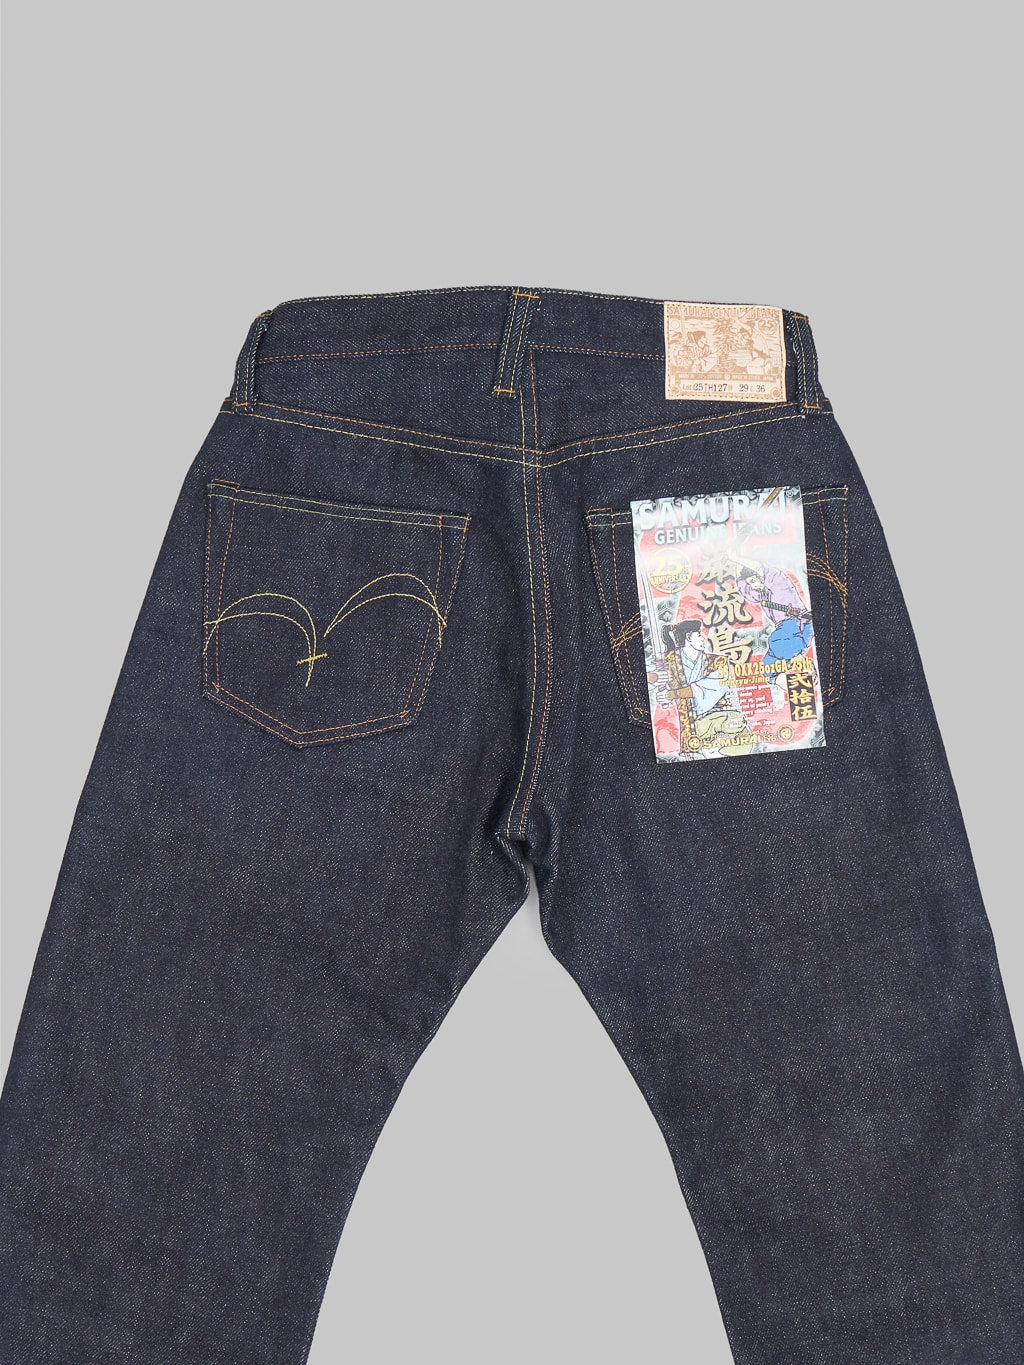 samurai s510xx 25oz 25th ganryujima 25oz selvedge jeans regular straight  back details